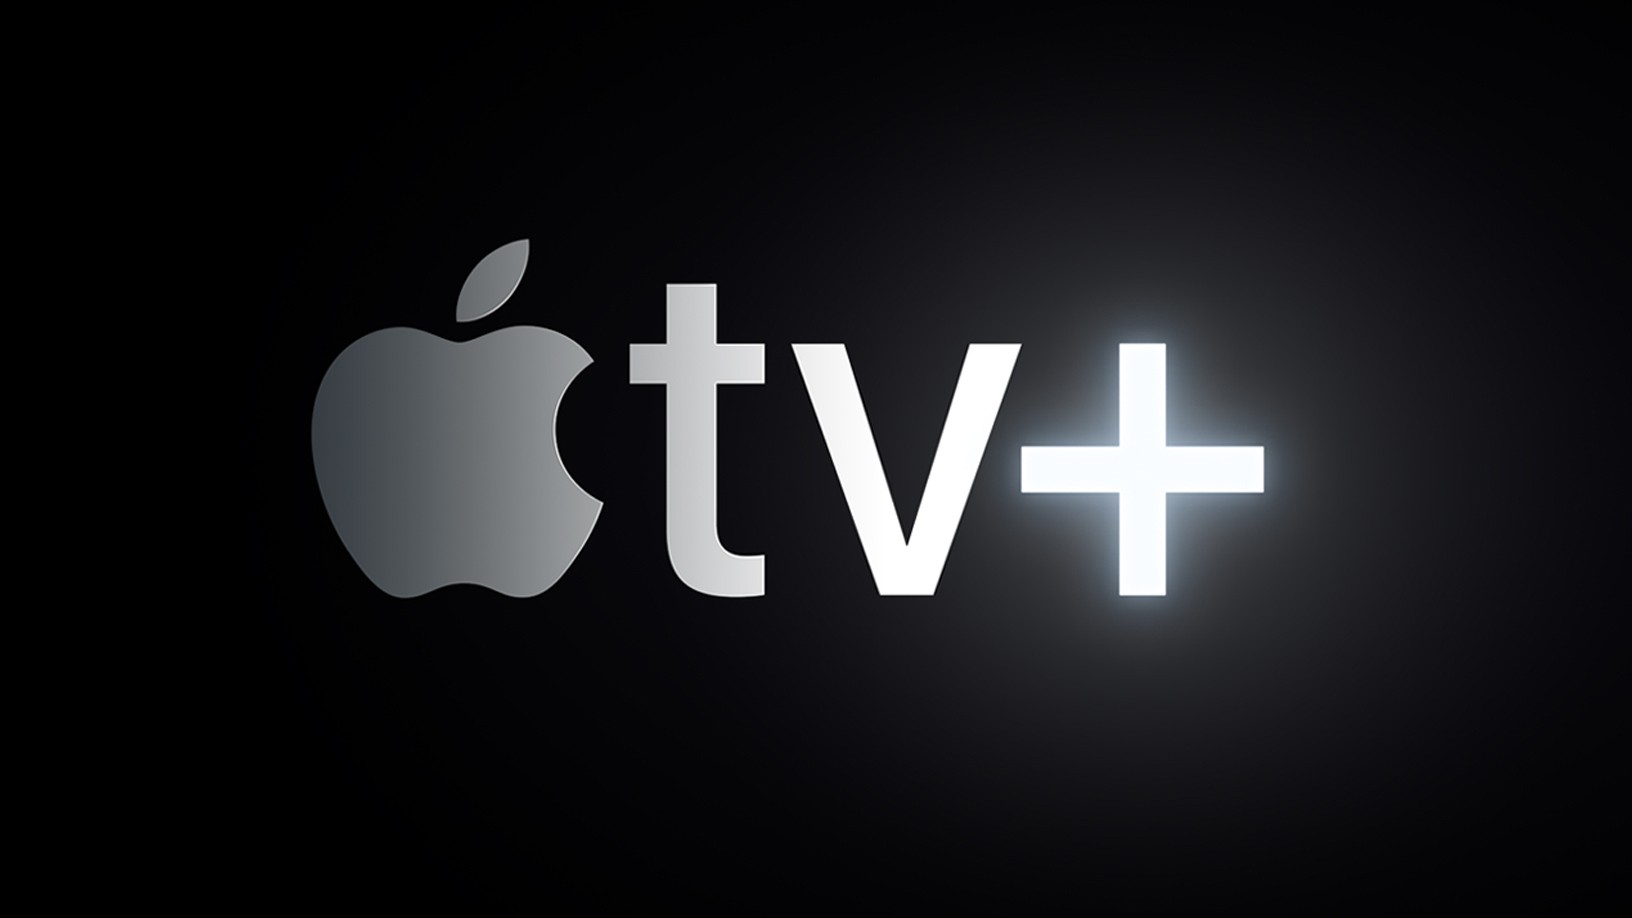 Apple unveils apple tv plus video subscription service and revamped apple tv app 525430 4